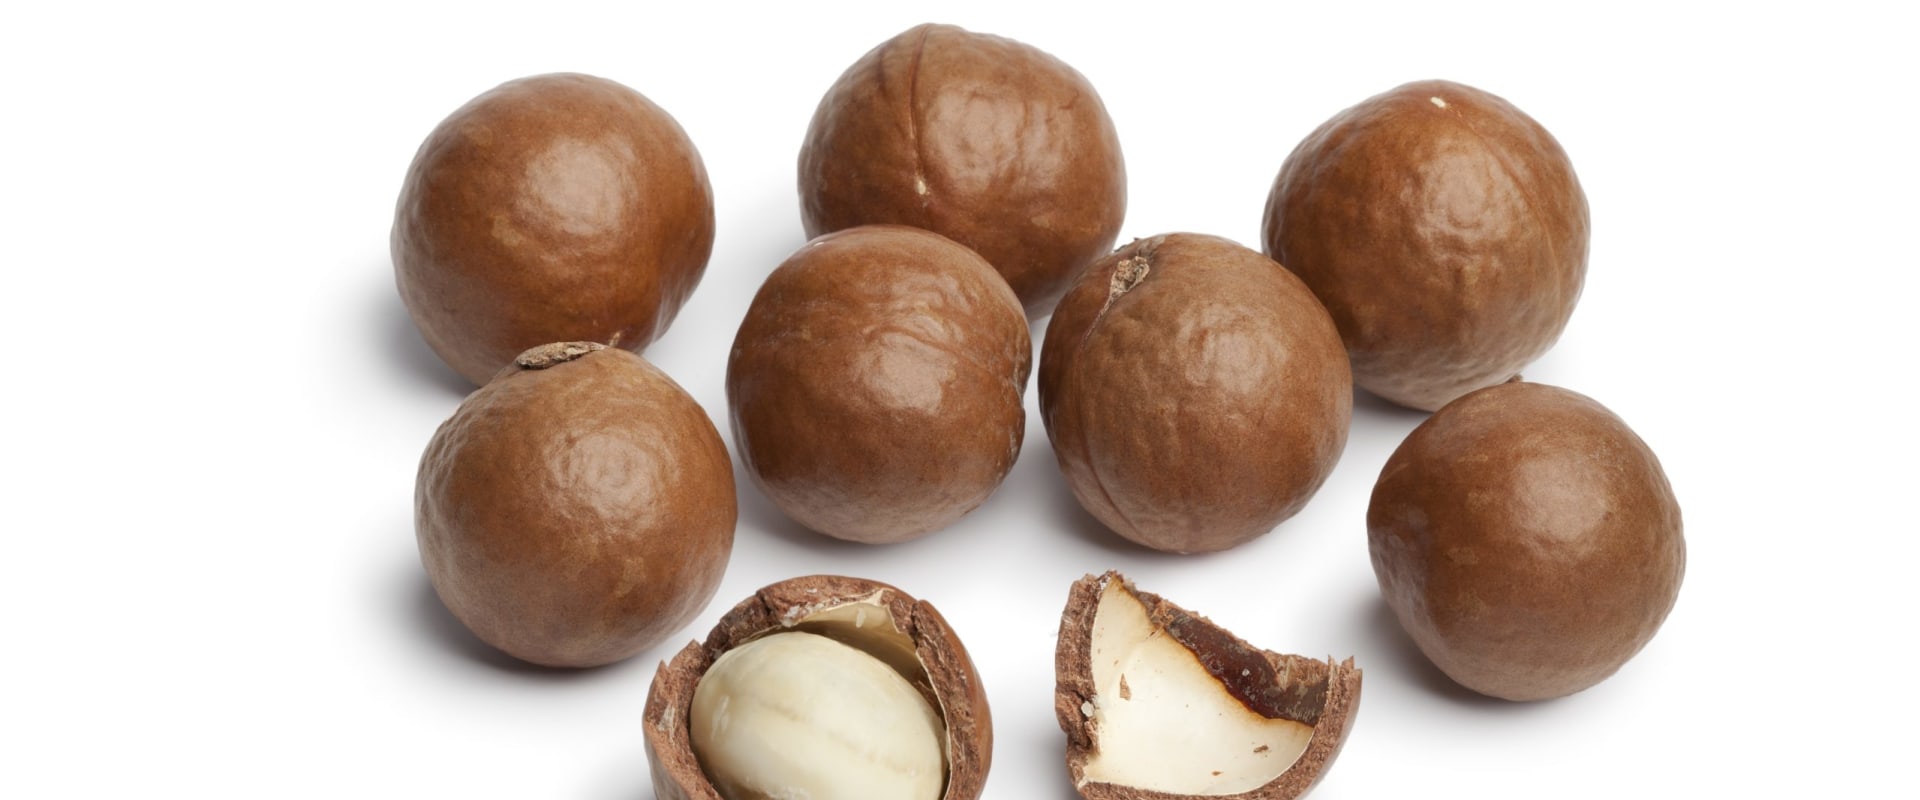 Who buys macadamia nuts?